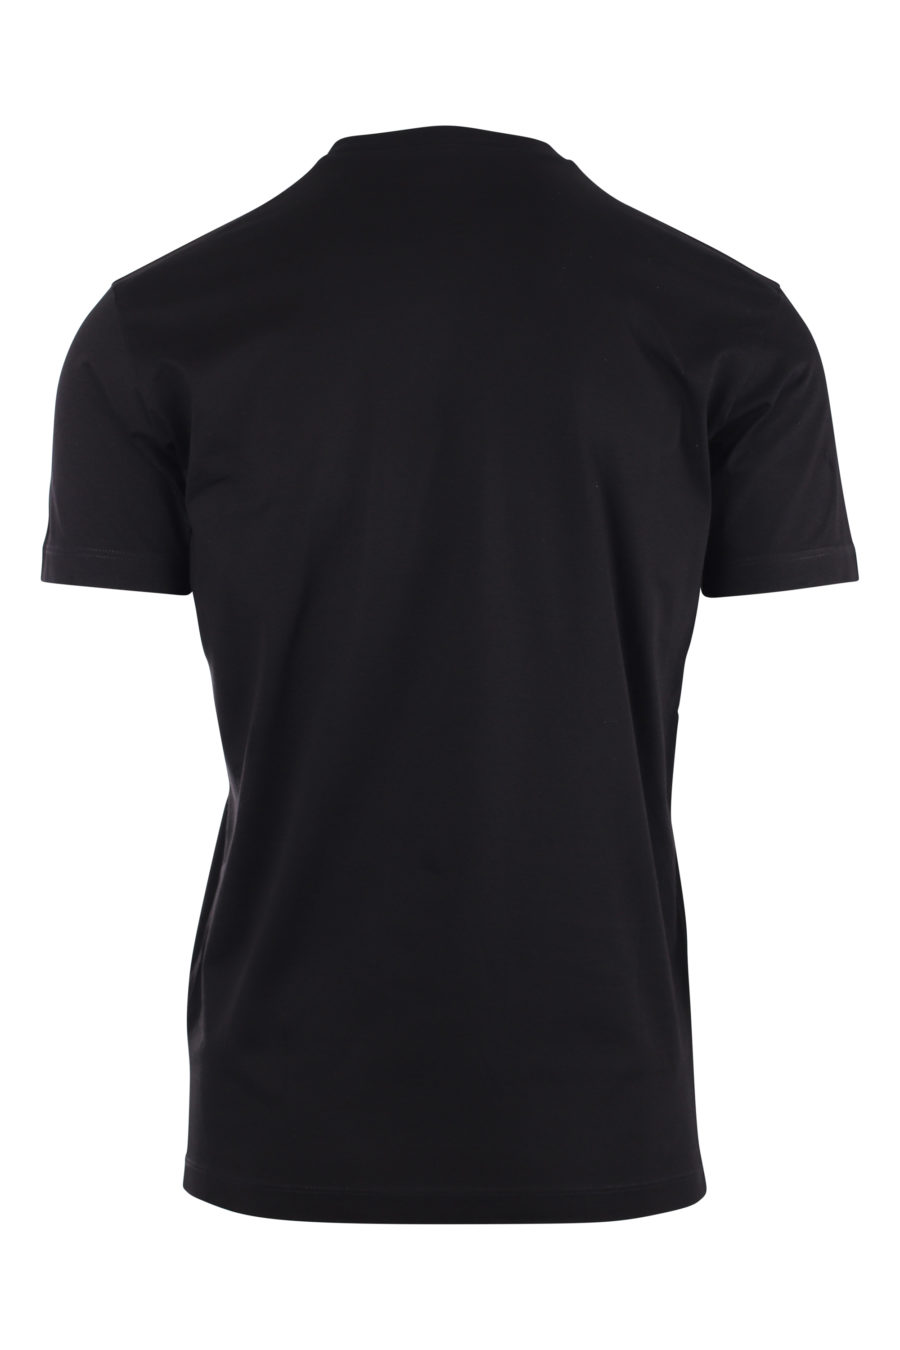 T-shirt noir avec petit logo ceresio 9 - IMG 9730